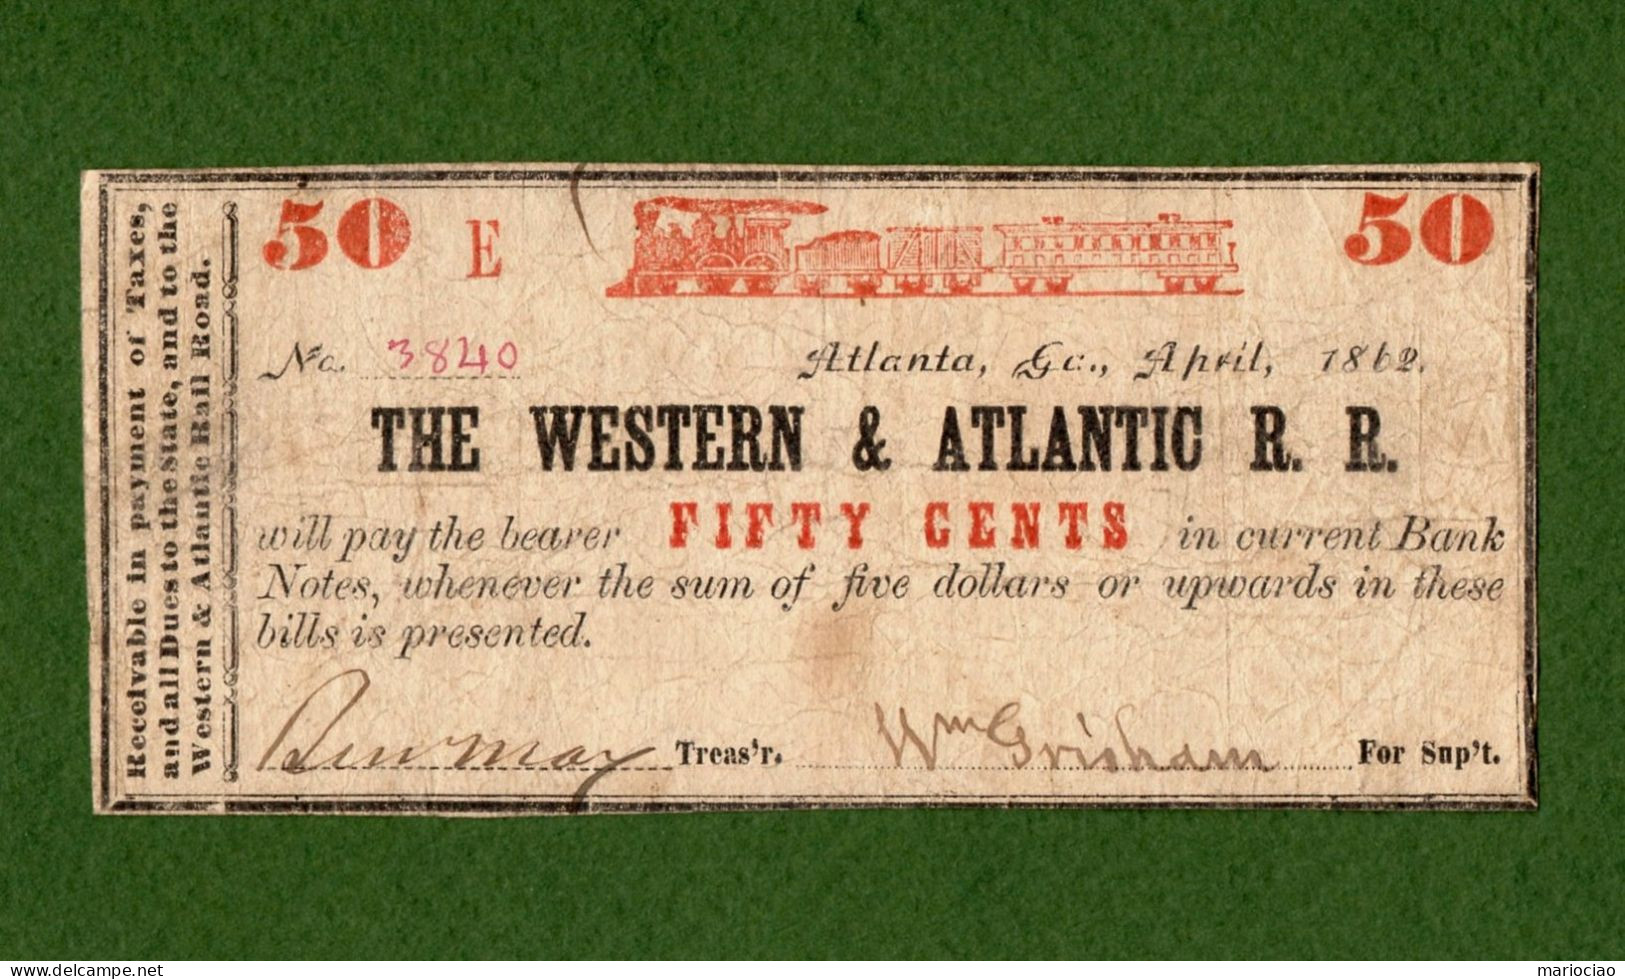 USA Note CIVIL WAR ERA The Western & Atlantic R. R. 50 Cents 1862 Atlanta, Georgia Red-Train N.3840 - Confederate Currency (1861-1864)